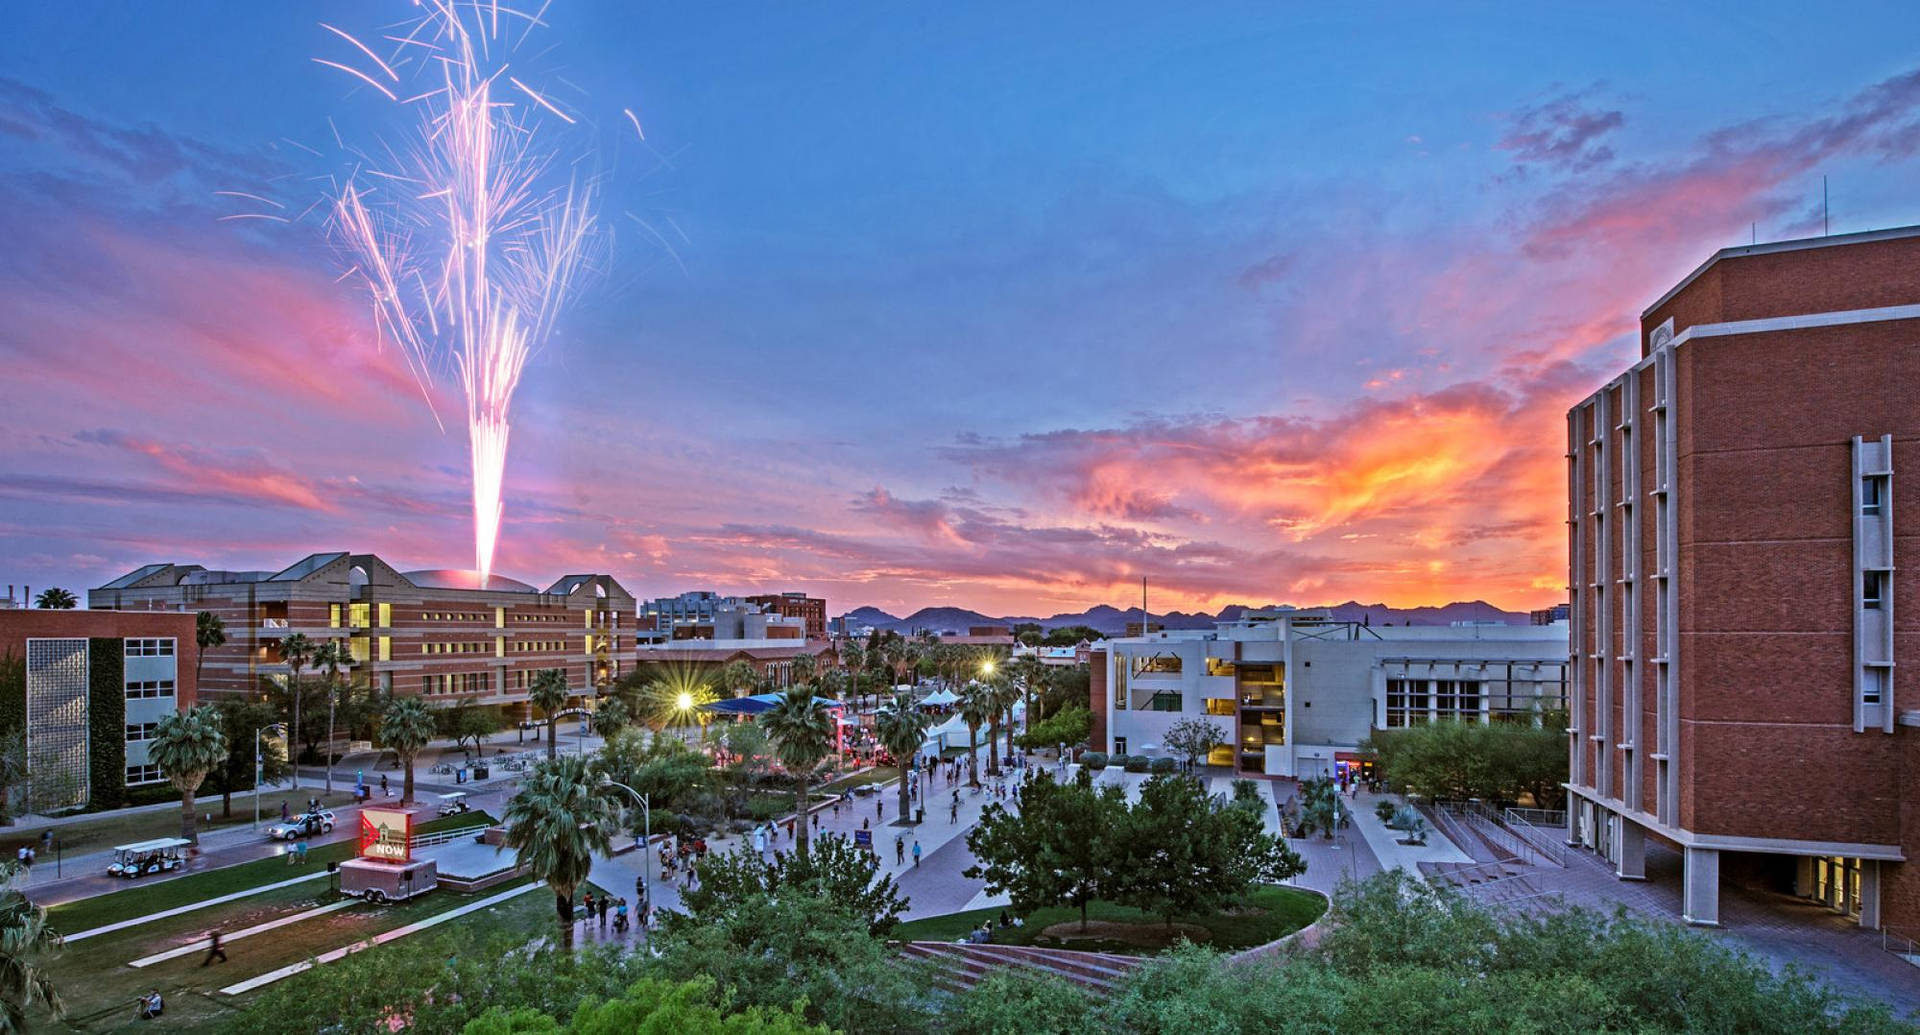 University Of Arizona Fireworks